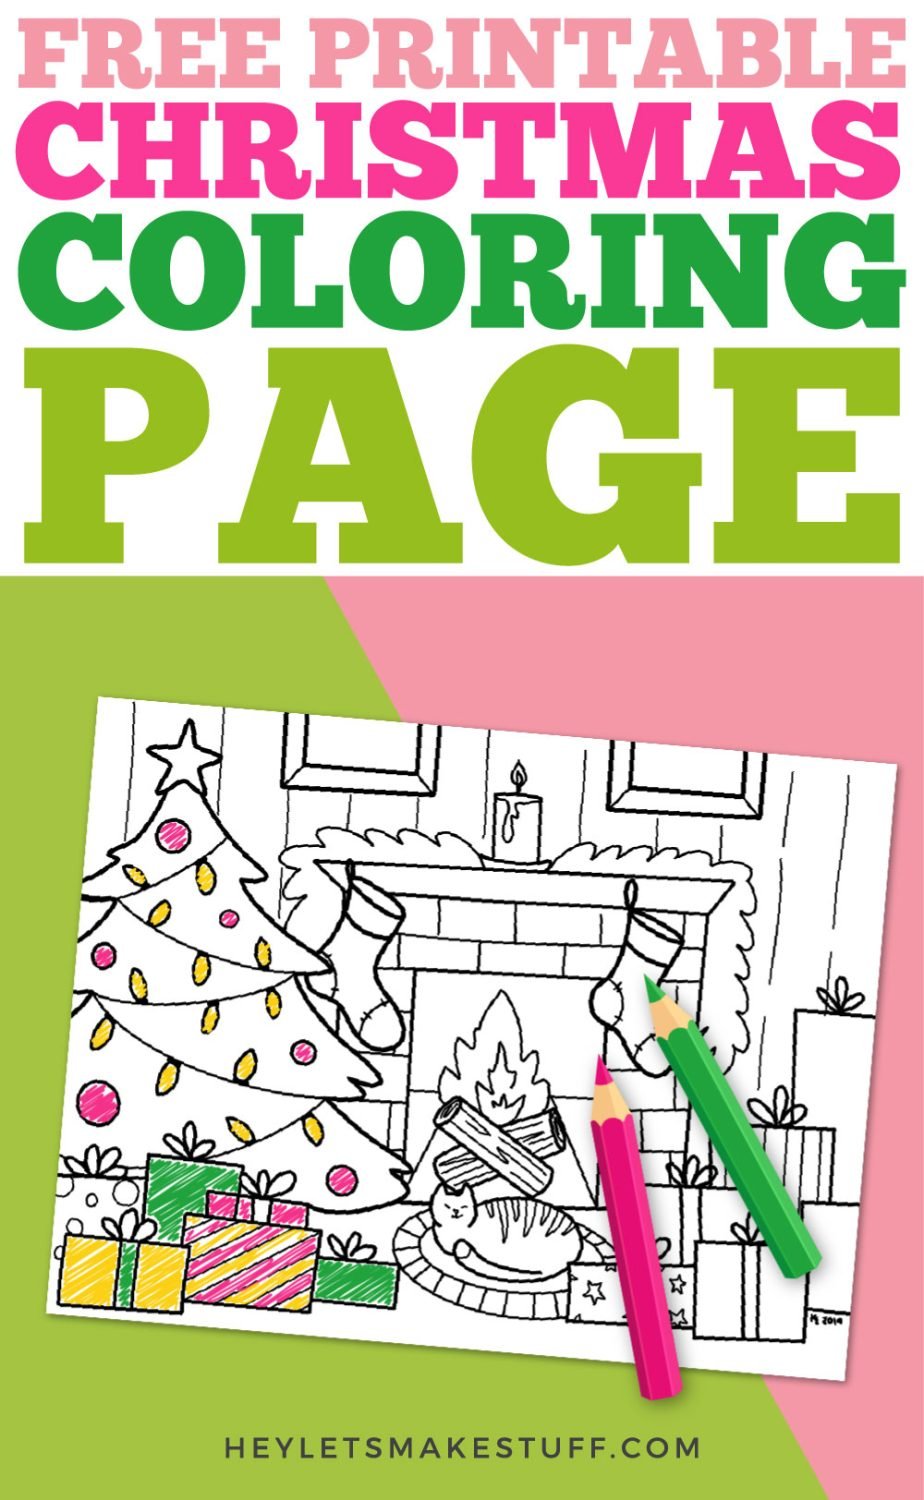 Christmas coloring page pin image